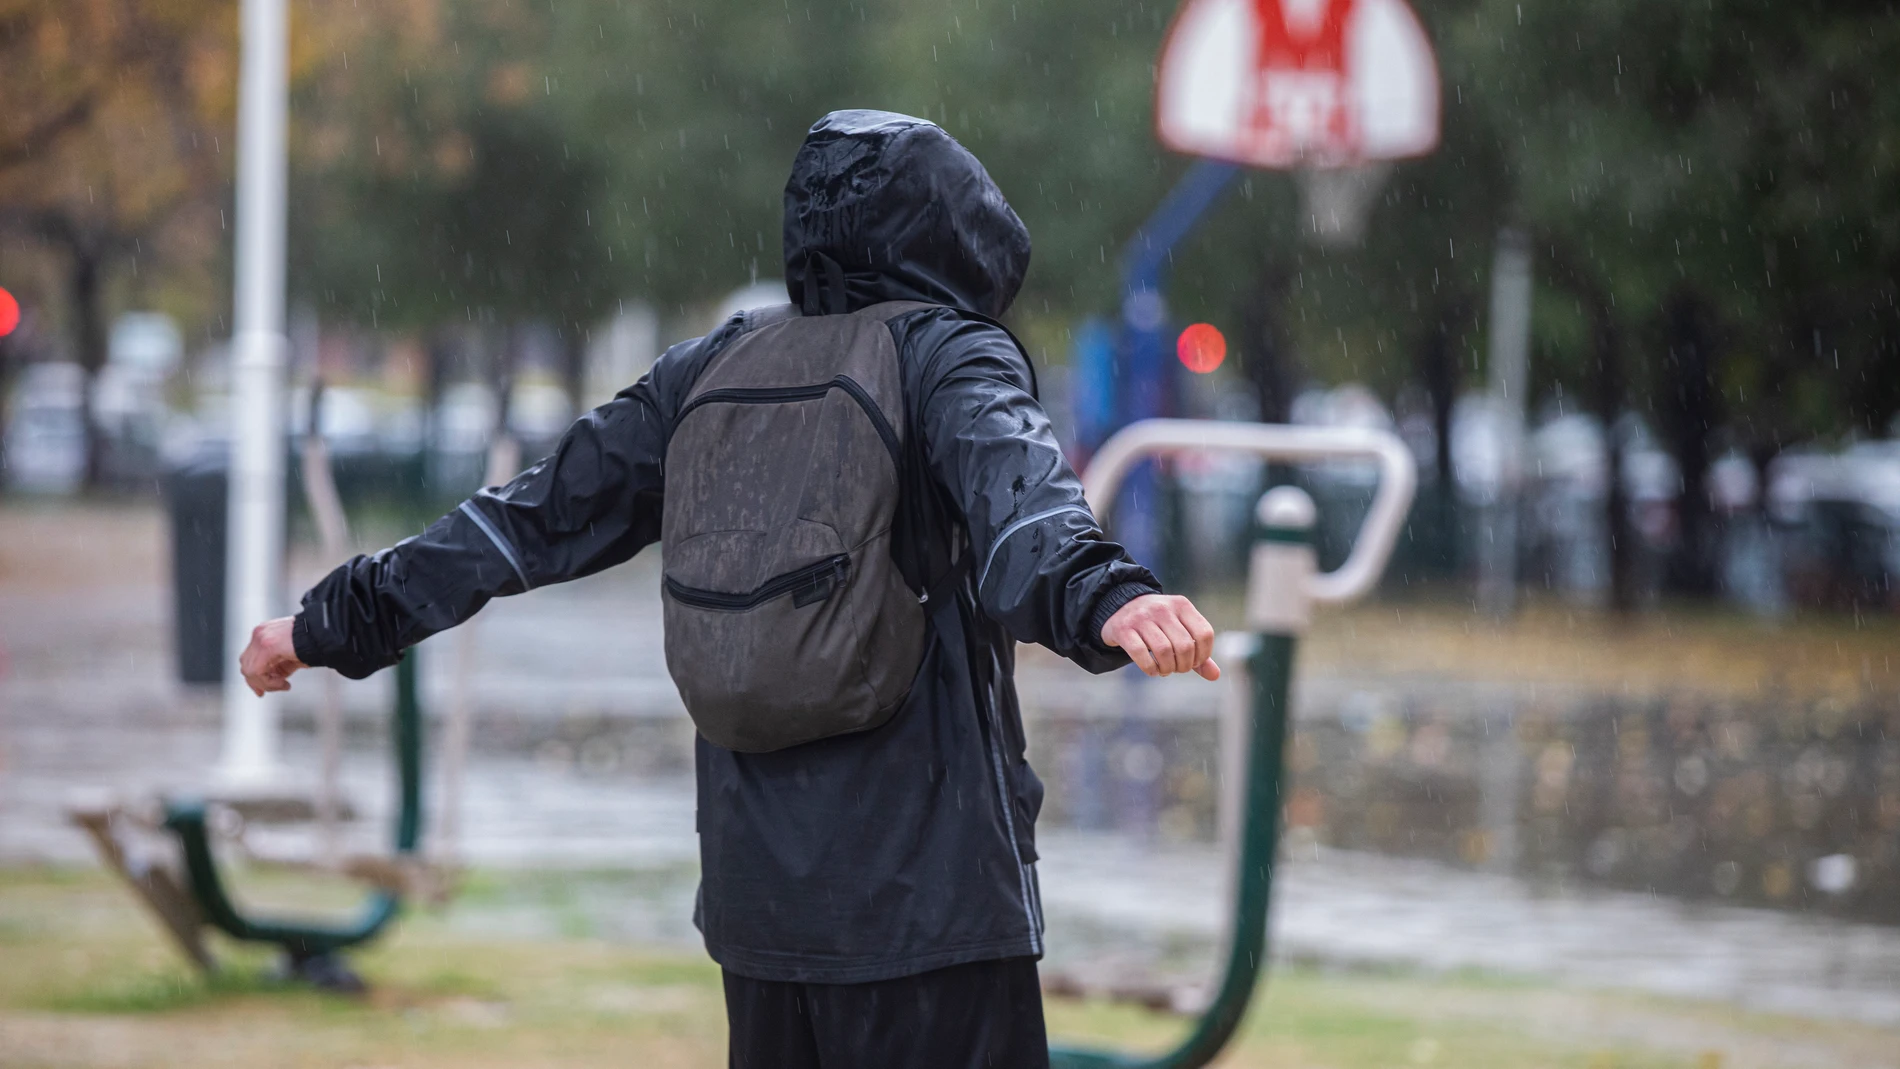 Una persona con un chubasquero bajo la lluvia (Andalucía, España)-. Firma: FRSE/RMG .-25 NOVIEMBRE 2020María José López / Europa Press25/11/2020